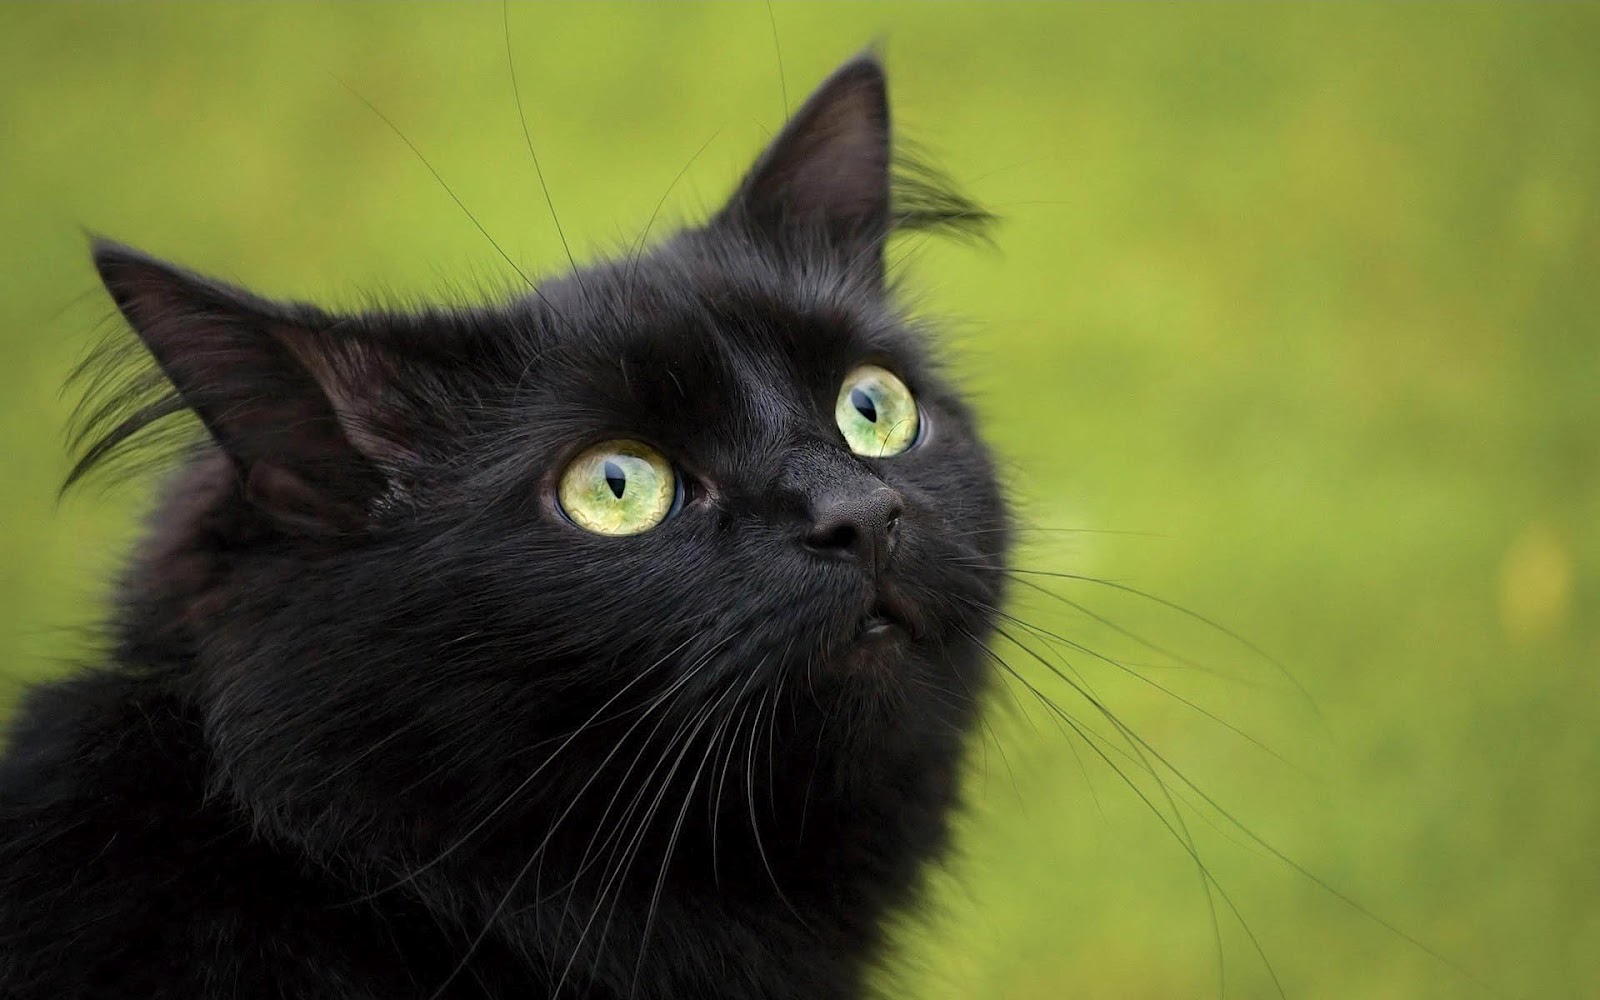 Black cat with green eyes wallpaper - All Best Desktop Wallpapers